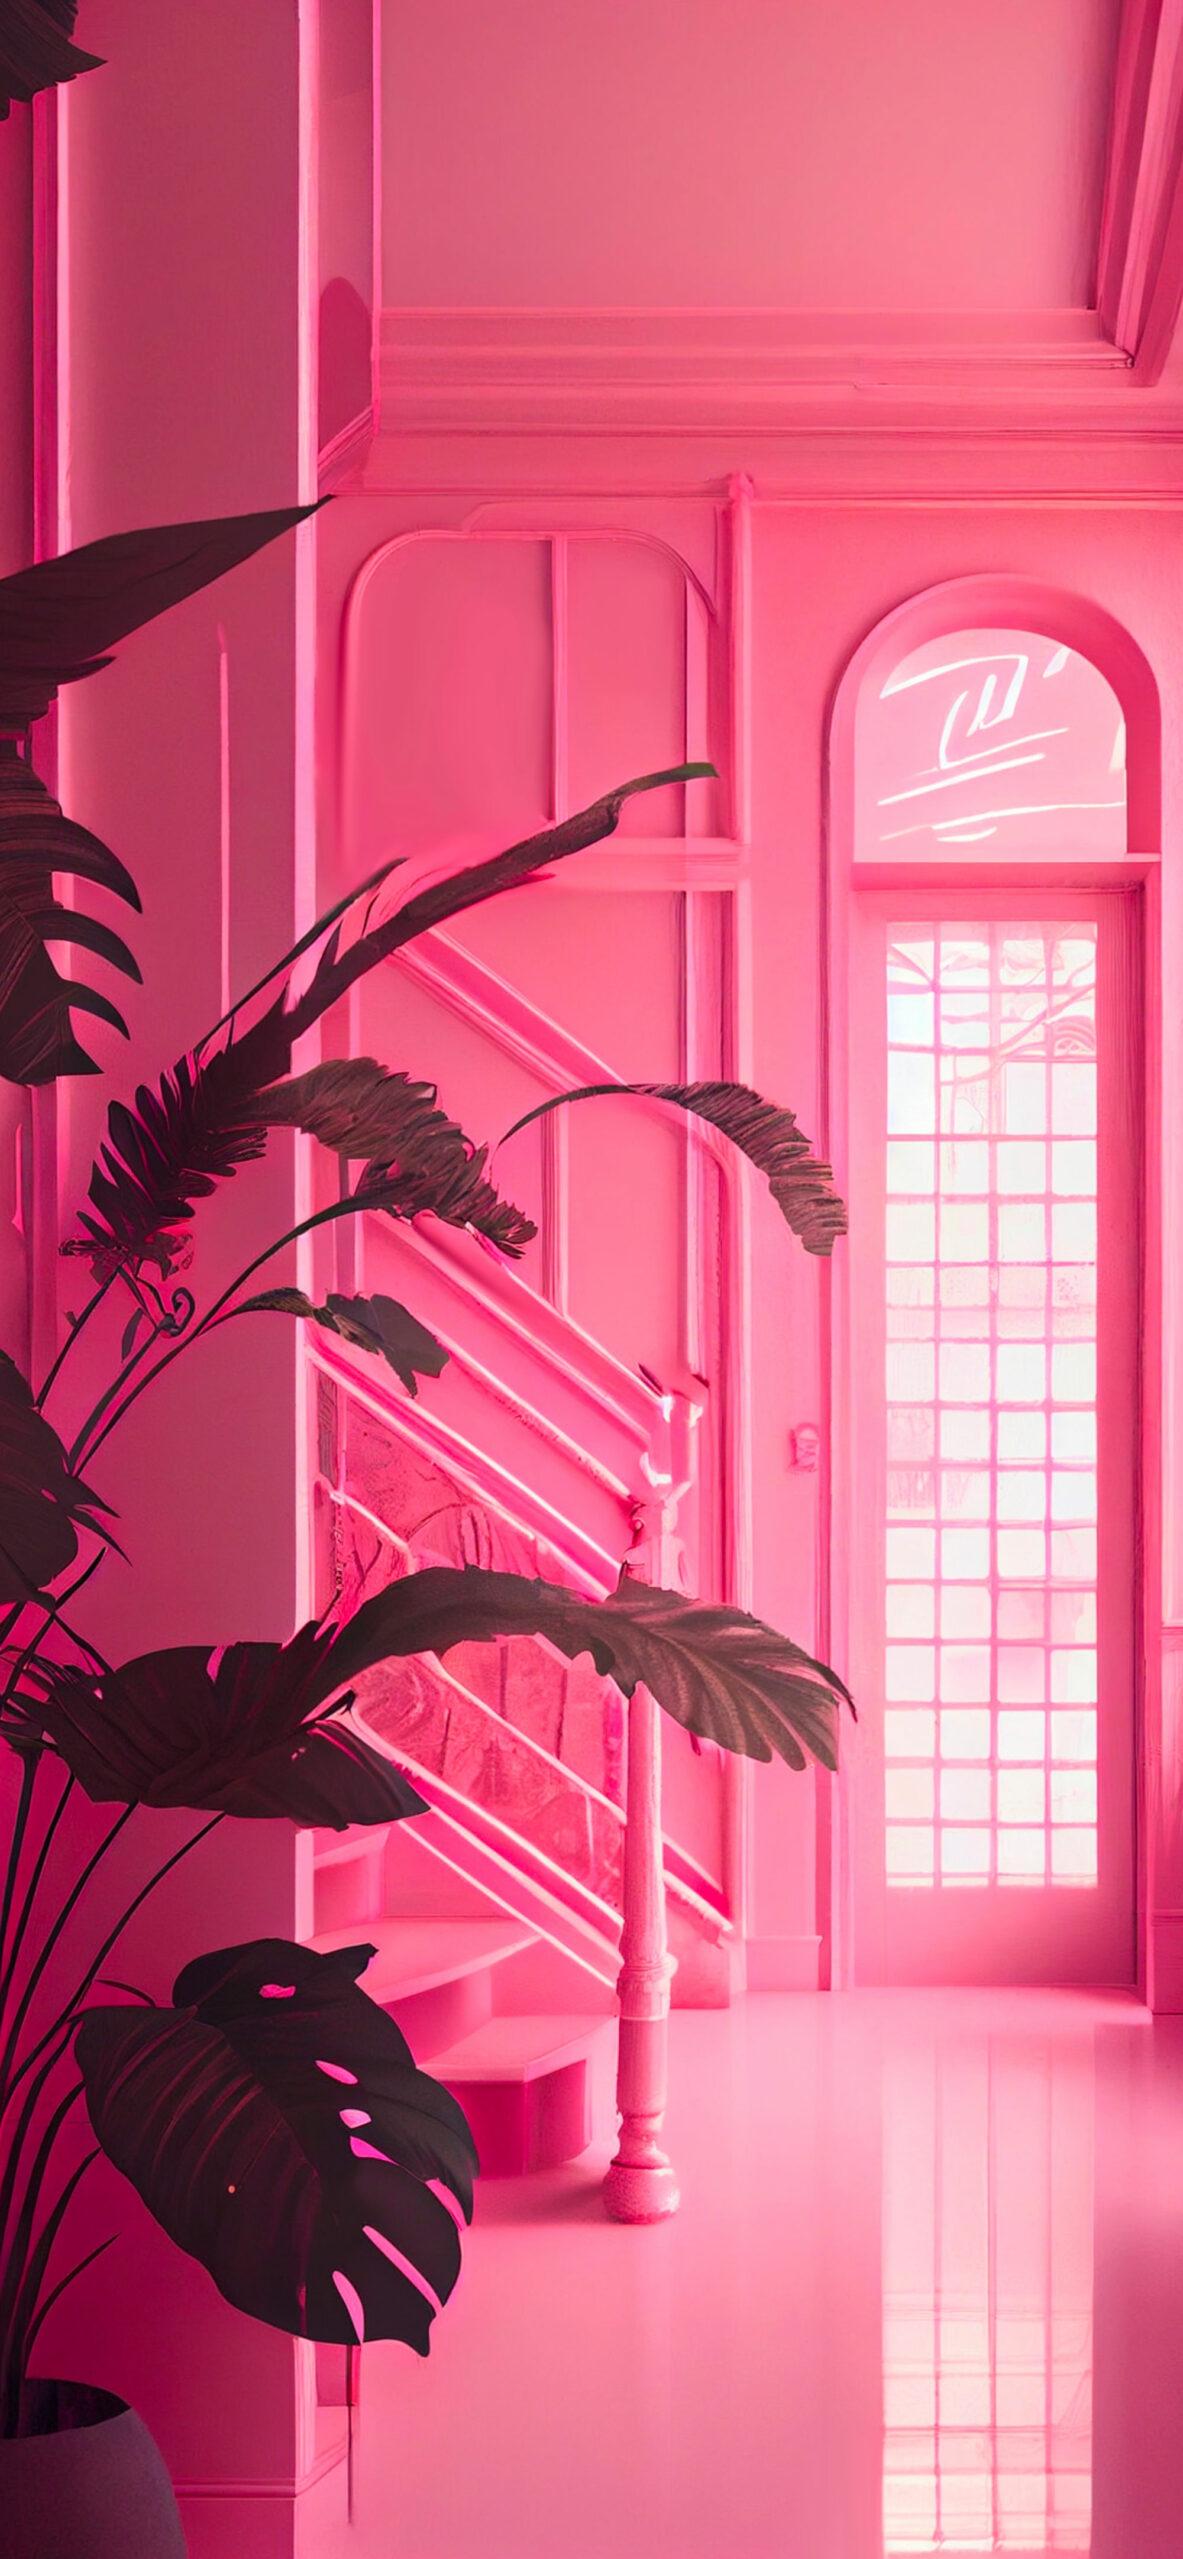 Aesthetic Pink Room Wallpaper iPhone